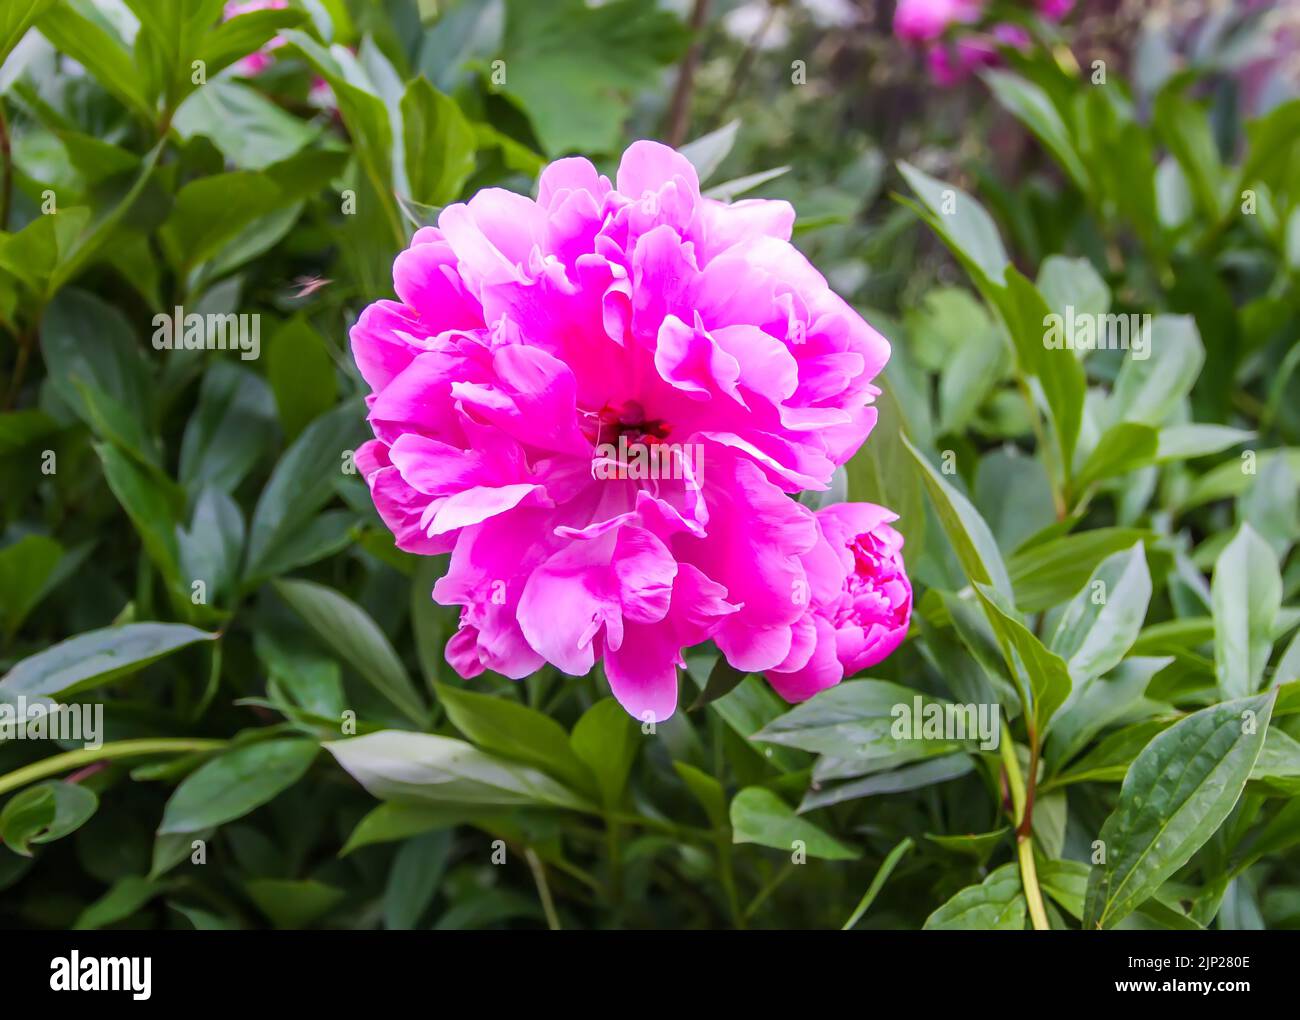 Pink flower peonies flowering in a summer garden. Stock Photo